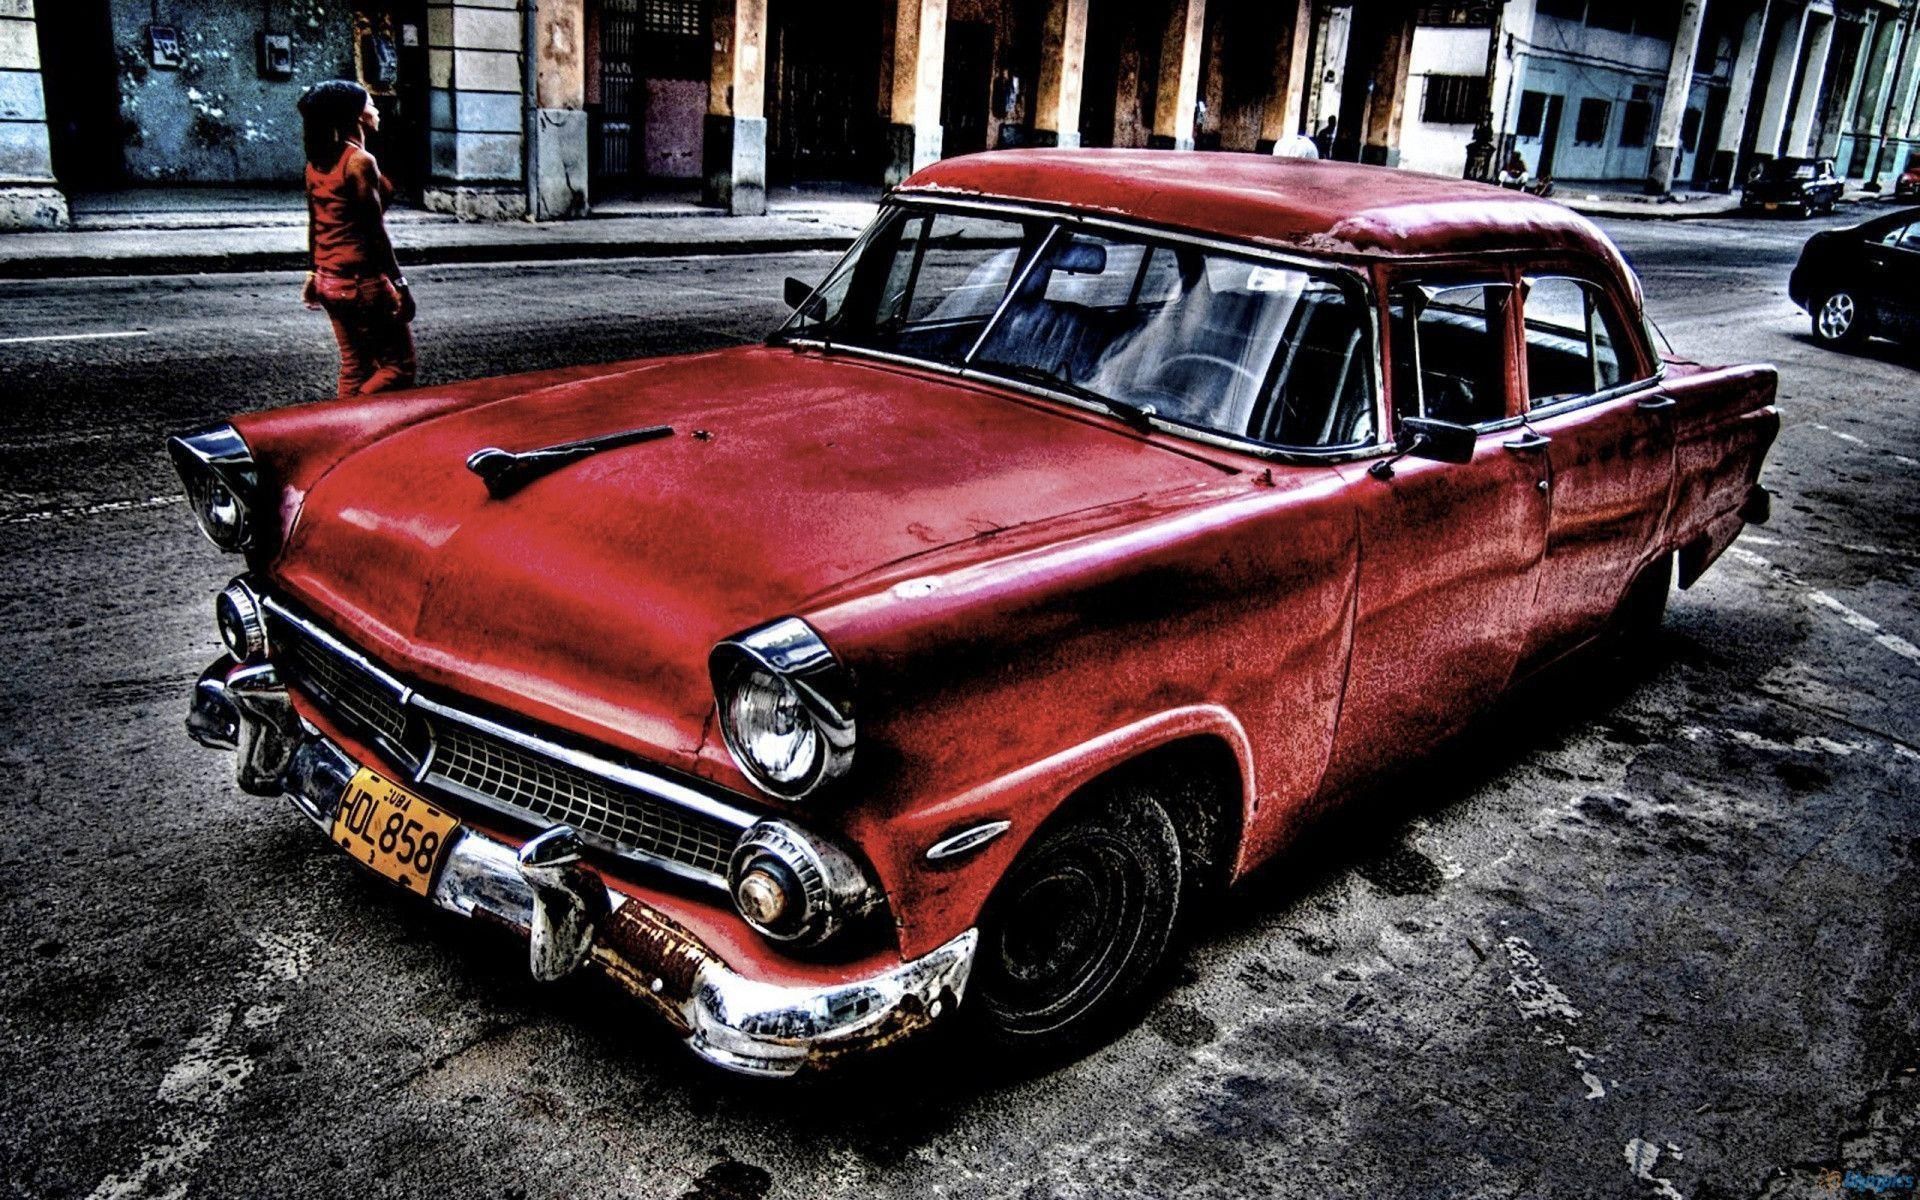 Classic Cars Wallpaper. Old classic cars, Car wallpaper, Old school cars